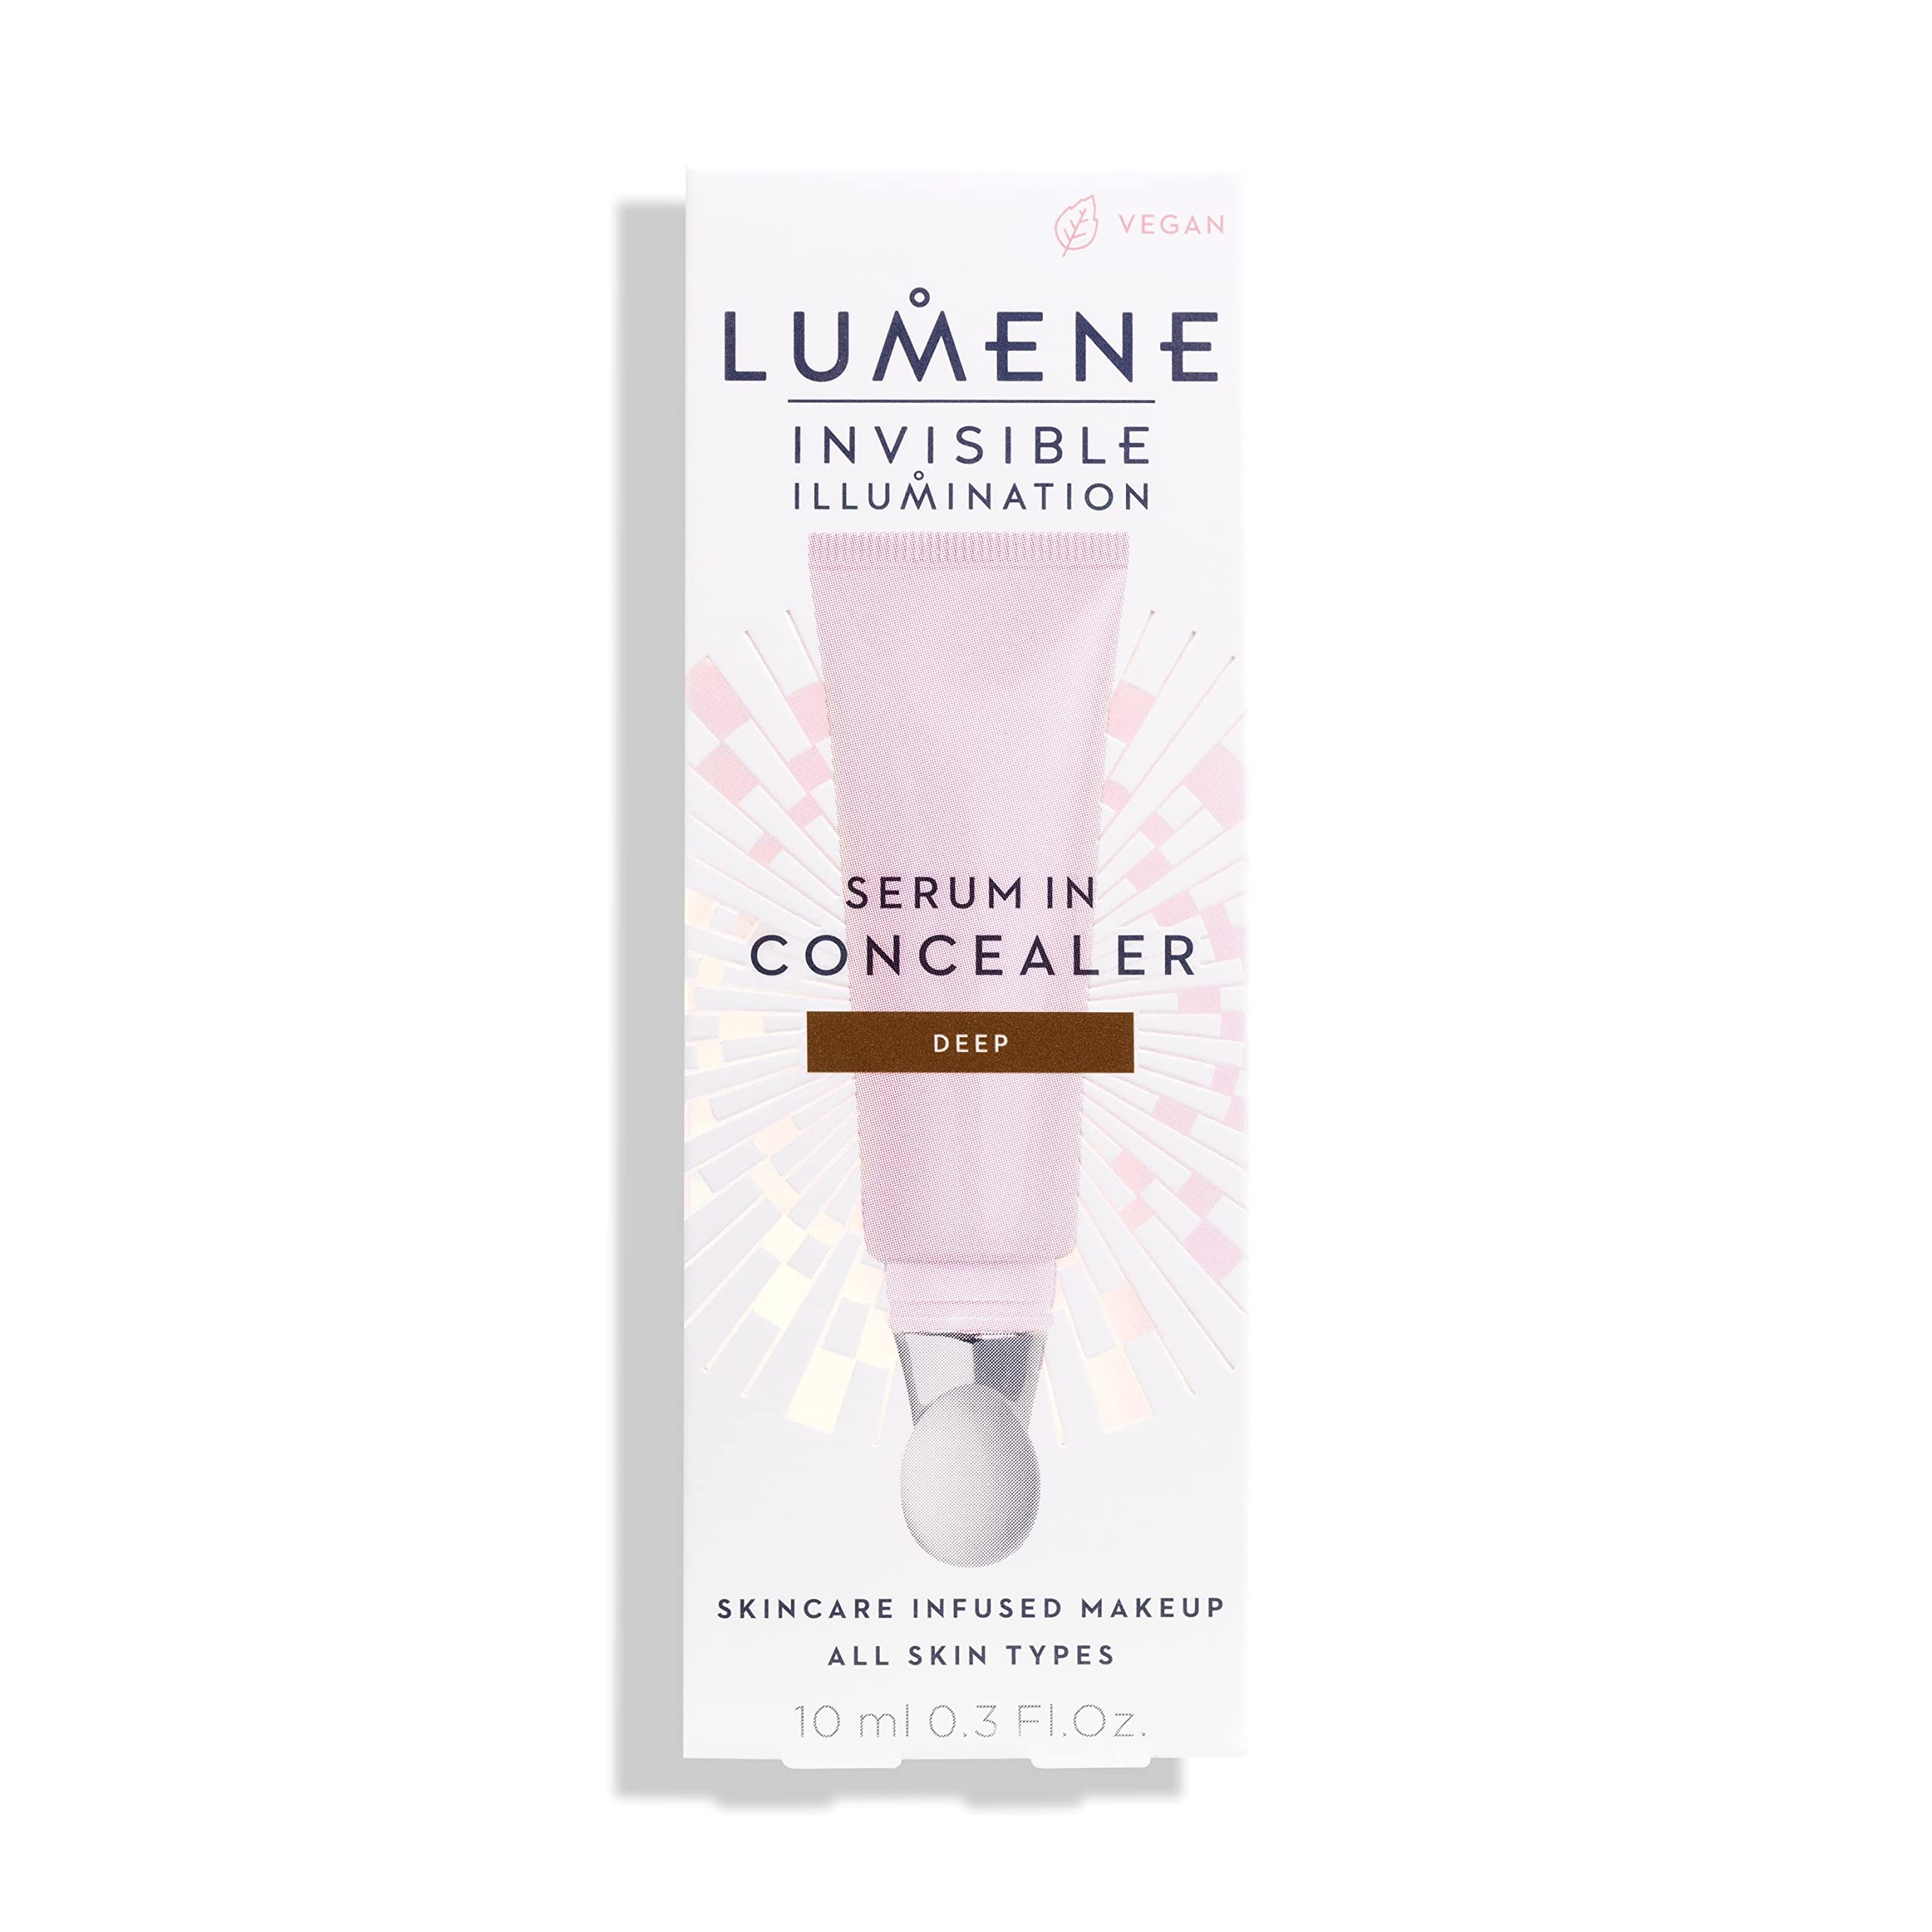 Lumene Invisible Illumination Serum in Concealer - Vitamin E Hydrating Concealer - Lightweight Color Corrector for Dark Circles - Multi-Use Makeup Hybrid - Deep (10ml)